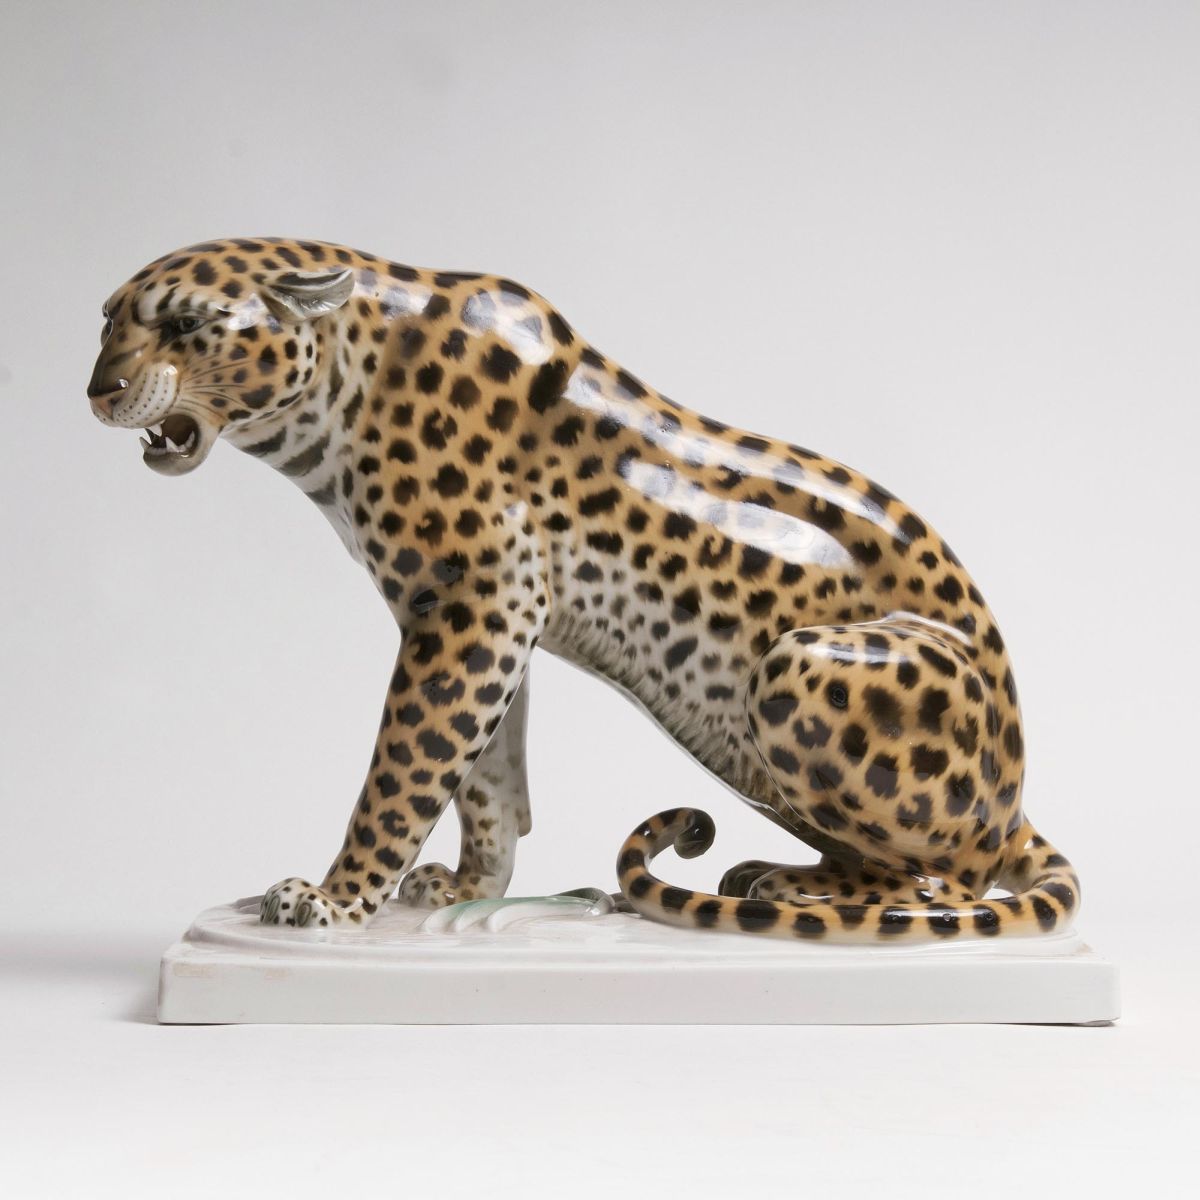 A large Animal Figure 'Seated Leopard'